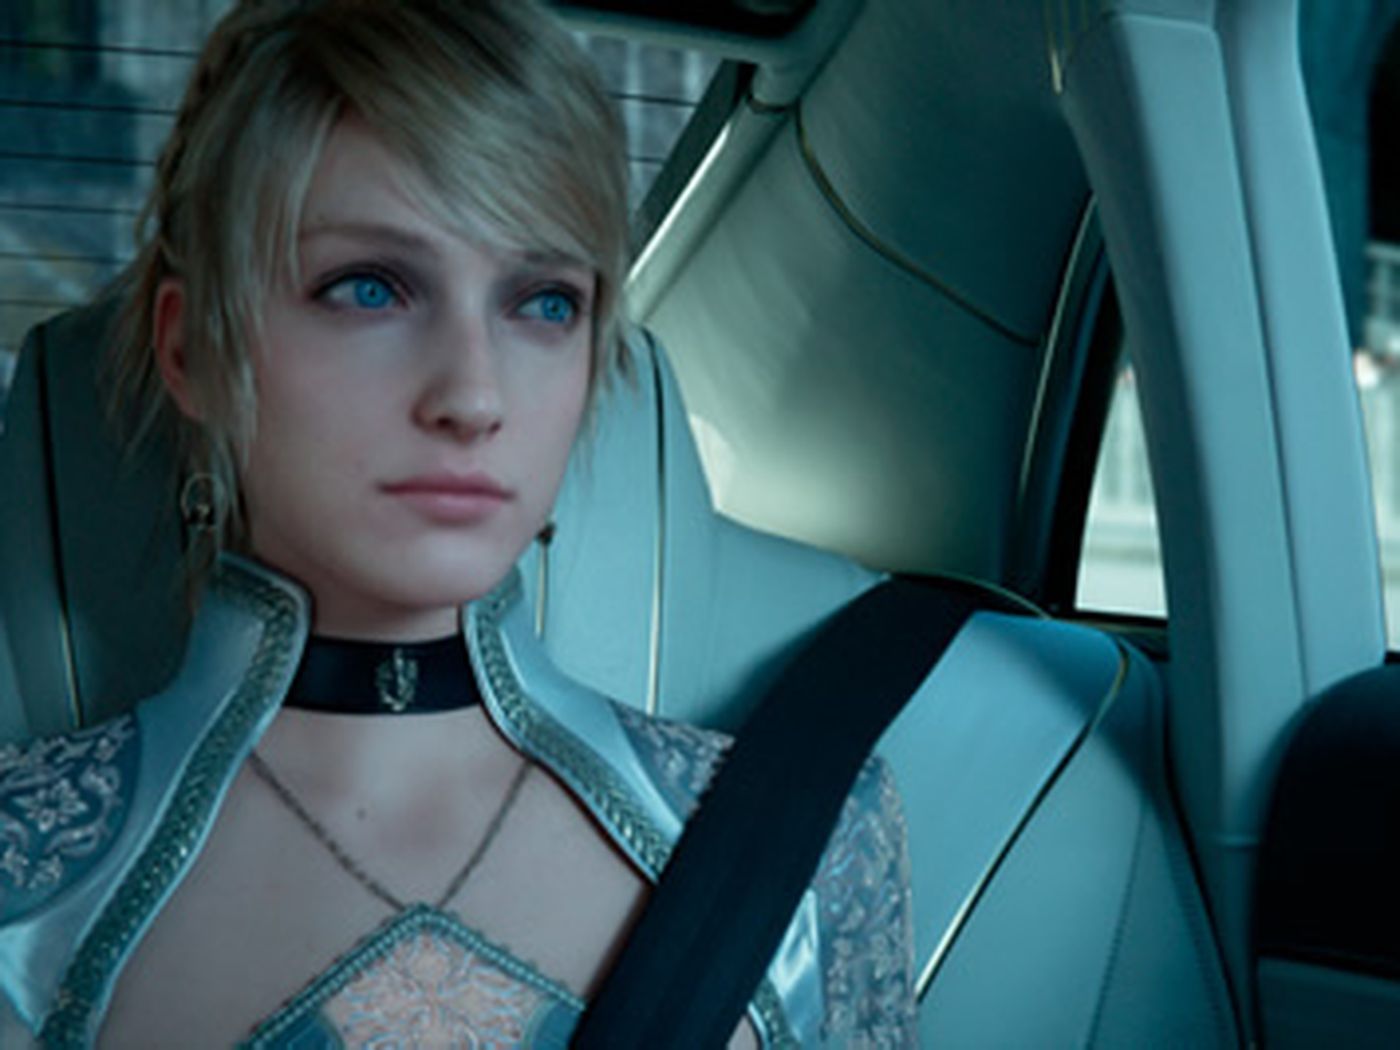 Kingsglaive: Final Fantasy 15 looks like the series' prettiest film adaptation yet